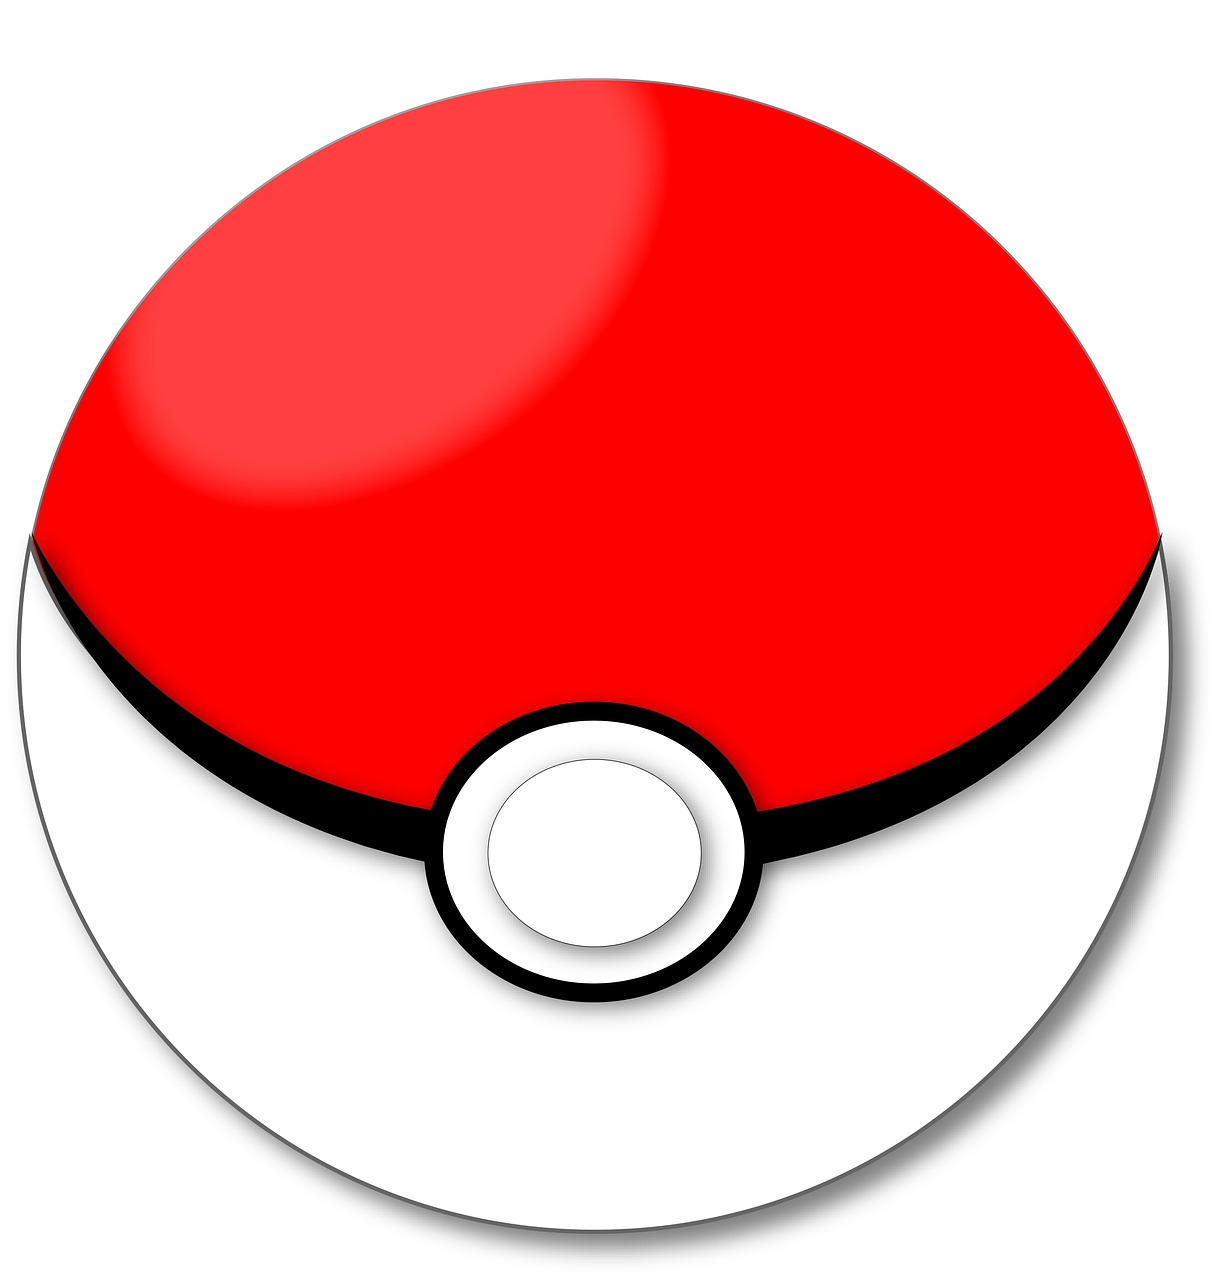 Ball,pokemon,go,catch,free pictures - free image from needpix.com